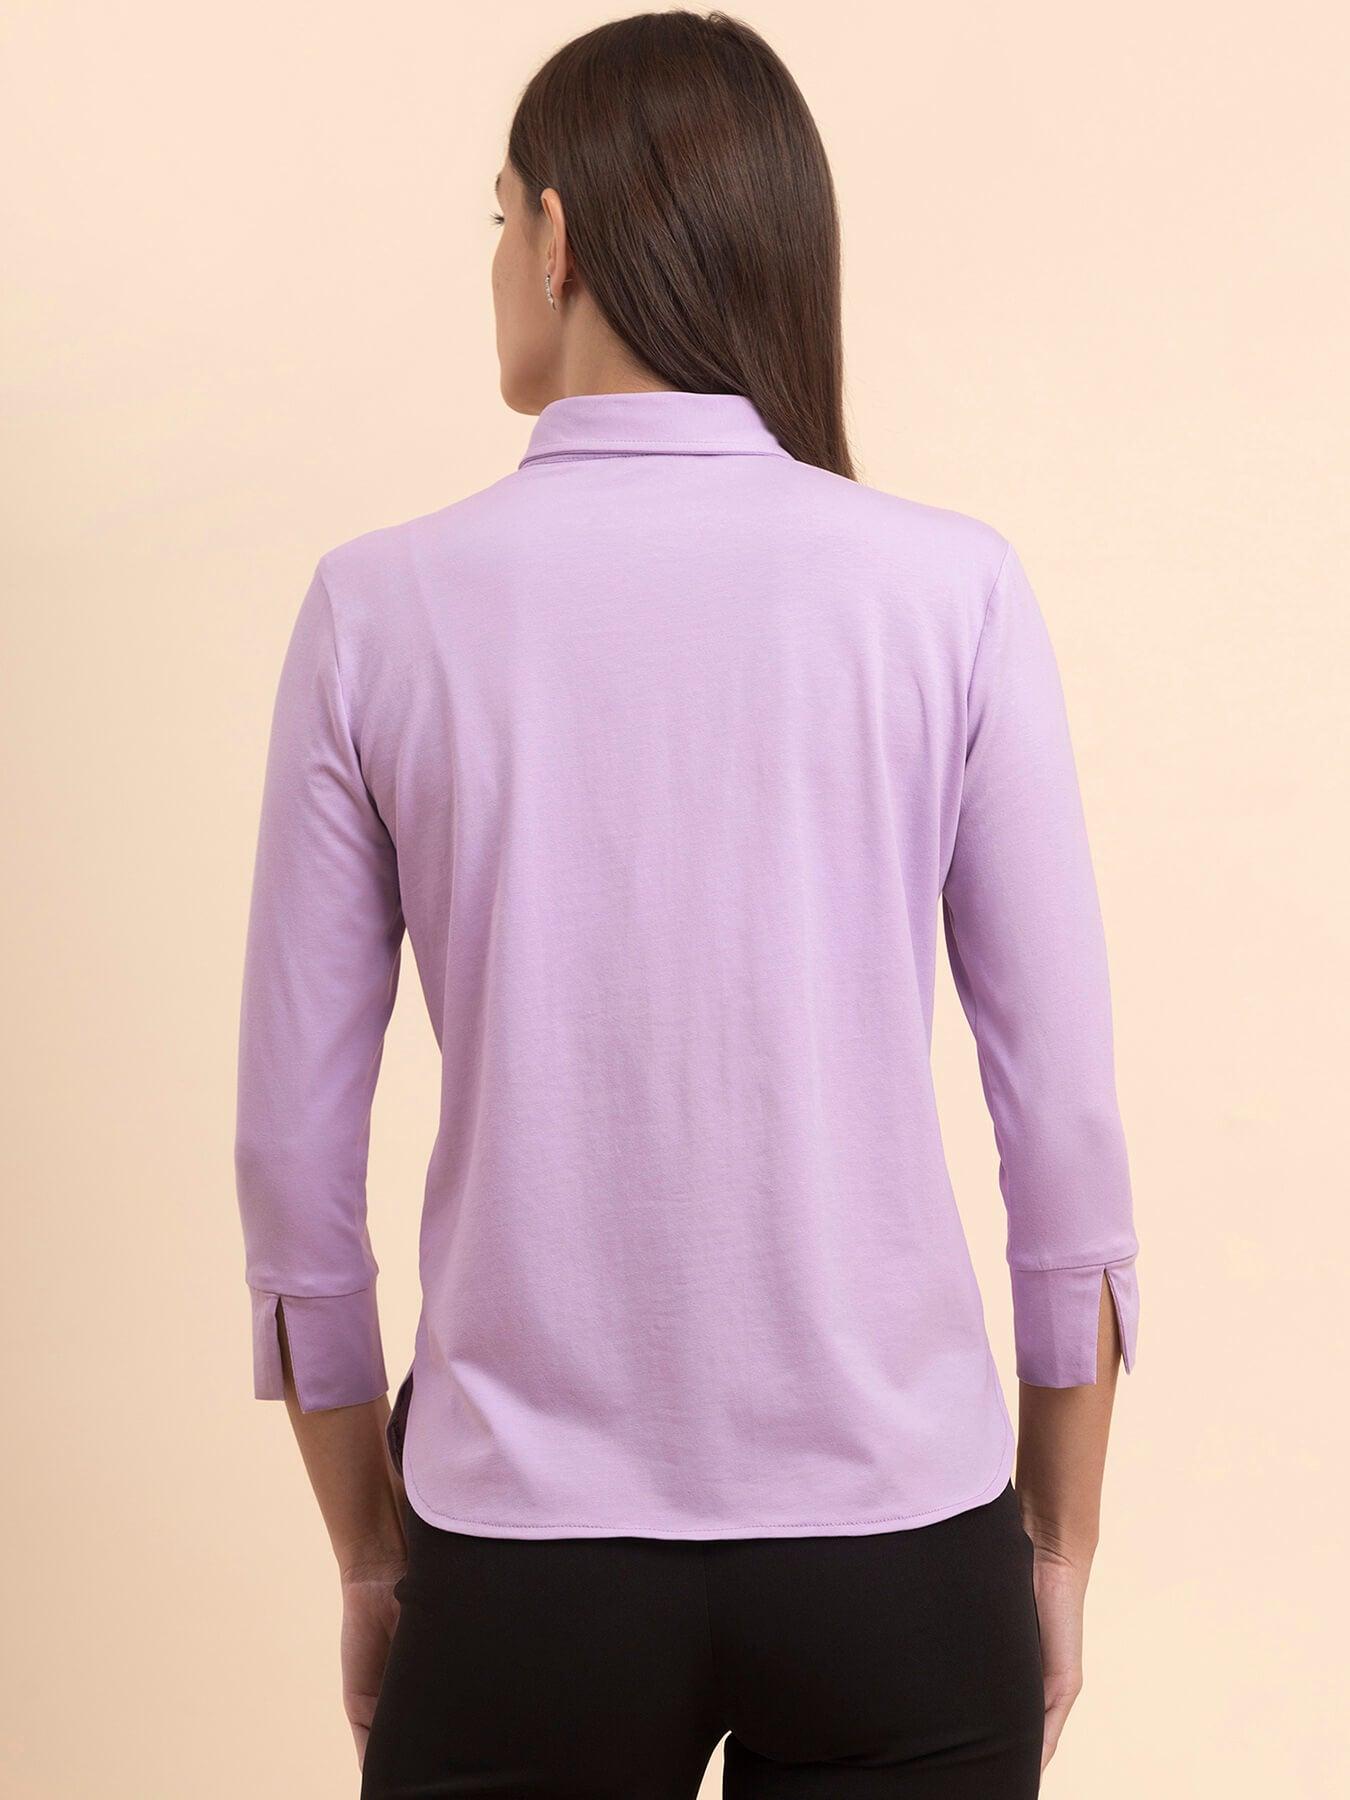 LivIn Button Down Cotton Knit Shirt - Lilac| Formal Shirts